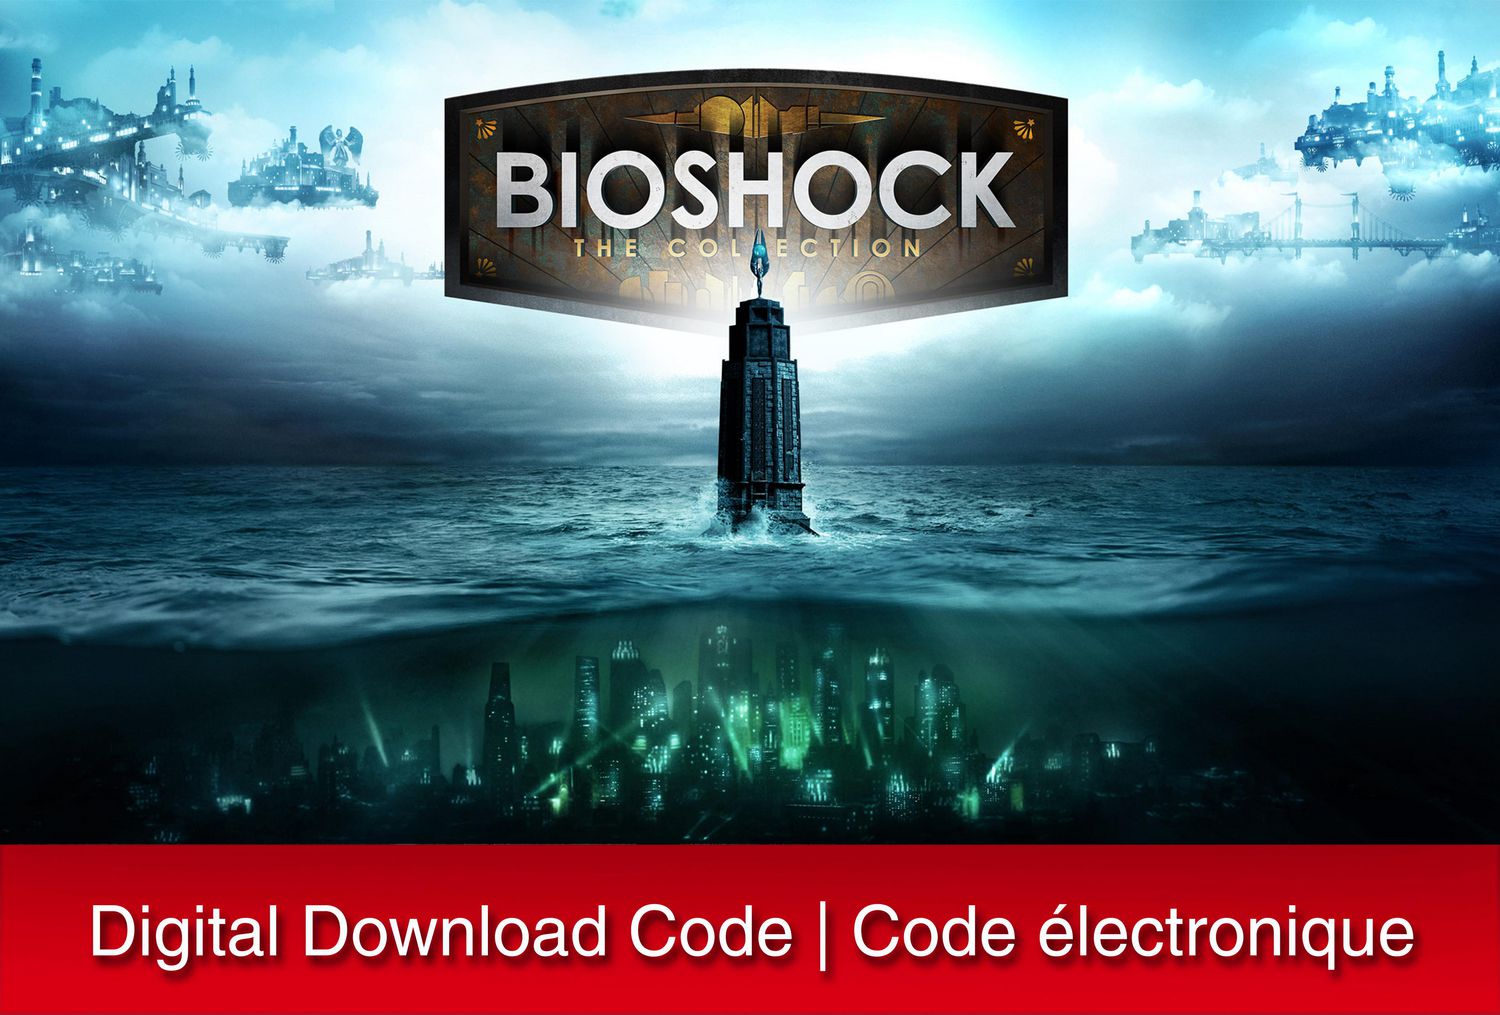 bioshock nintendo switch download